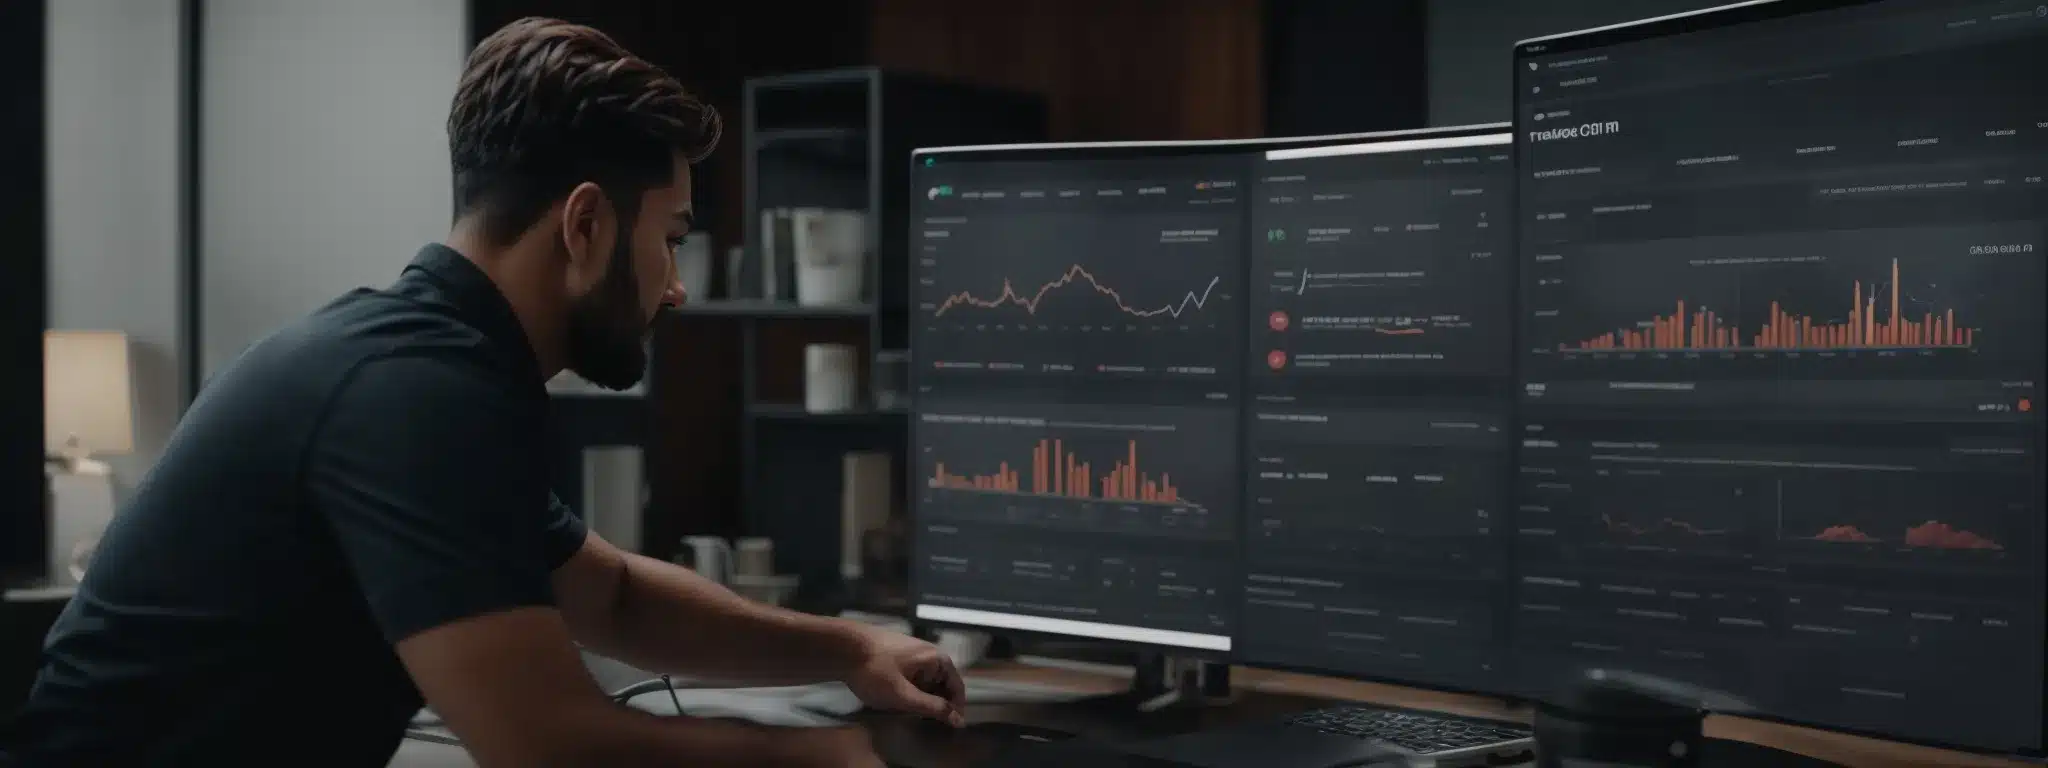 A Digital Marketing Strategist Presents A User-Friendly Crm Interface On A Screen, Showcasing A Customer-Centric Analytics Dashboard.